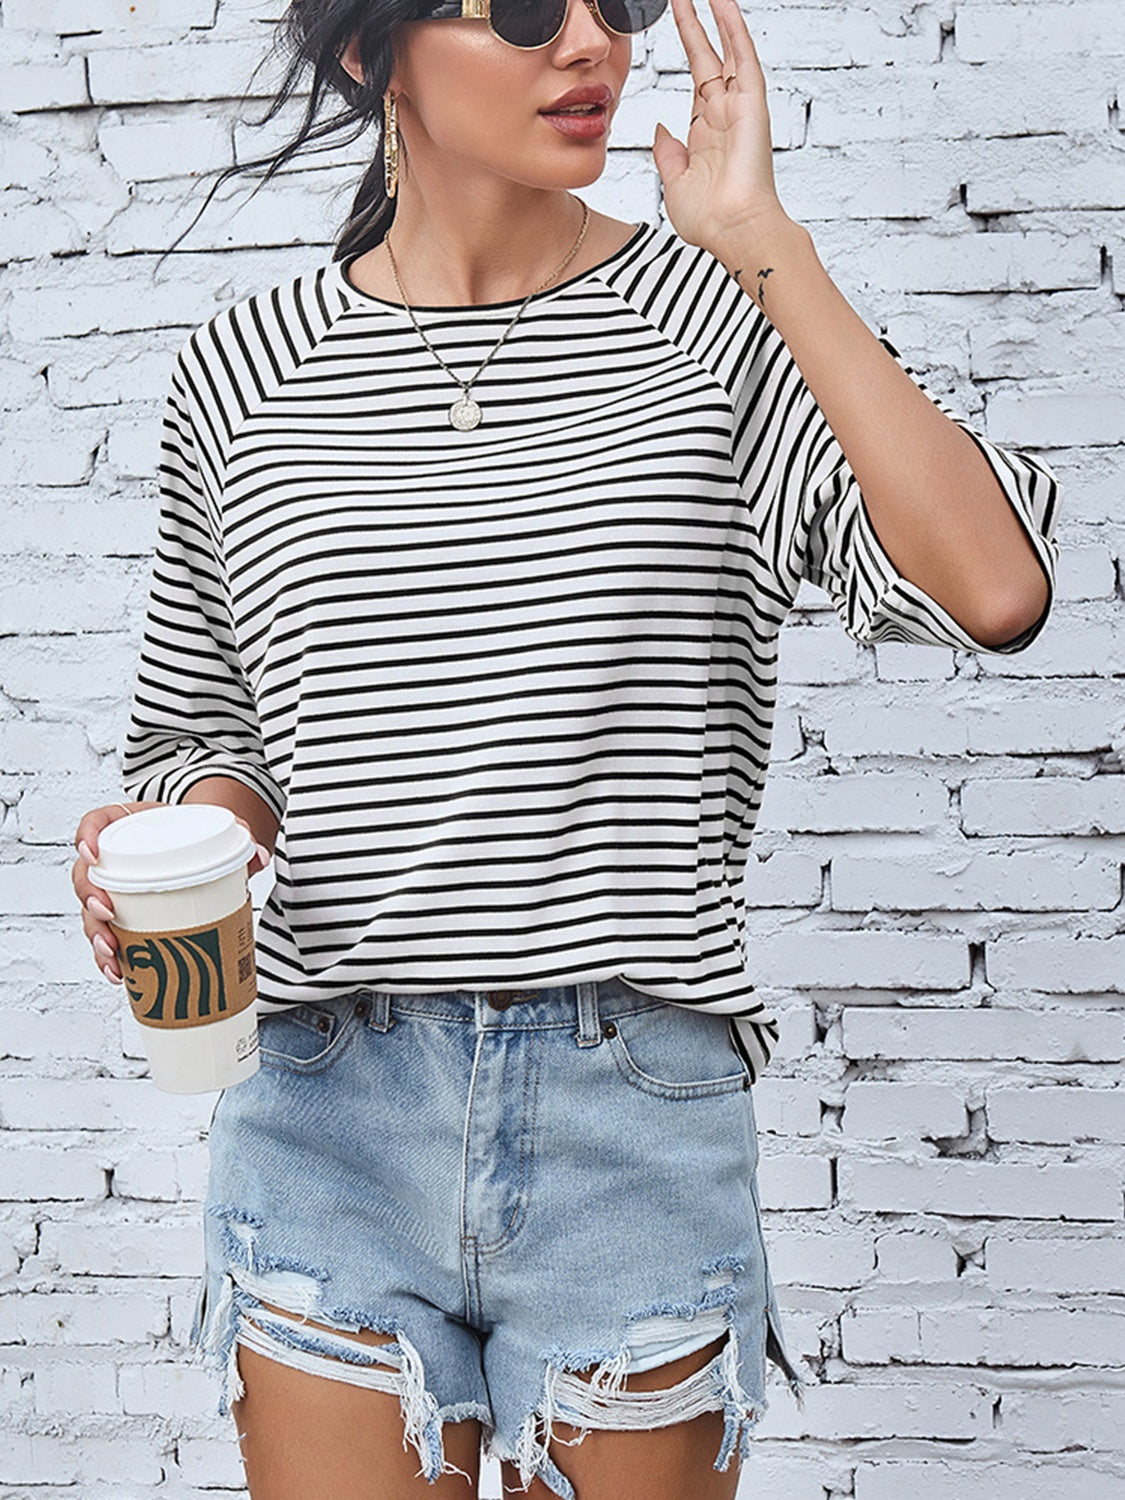 Black and White Striped Round Neck Raglan Short Sleeve T-Shirt Women's Fashion